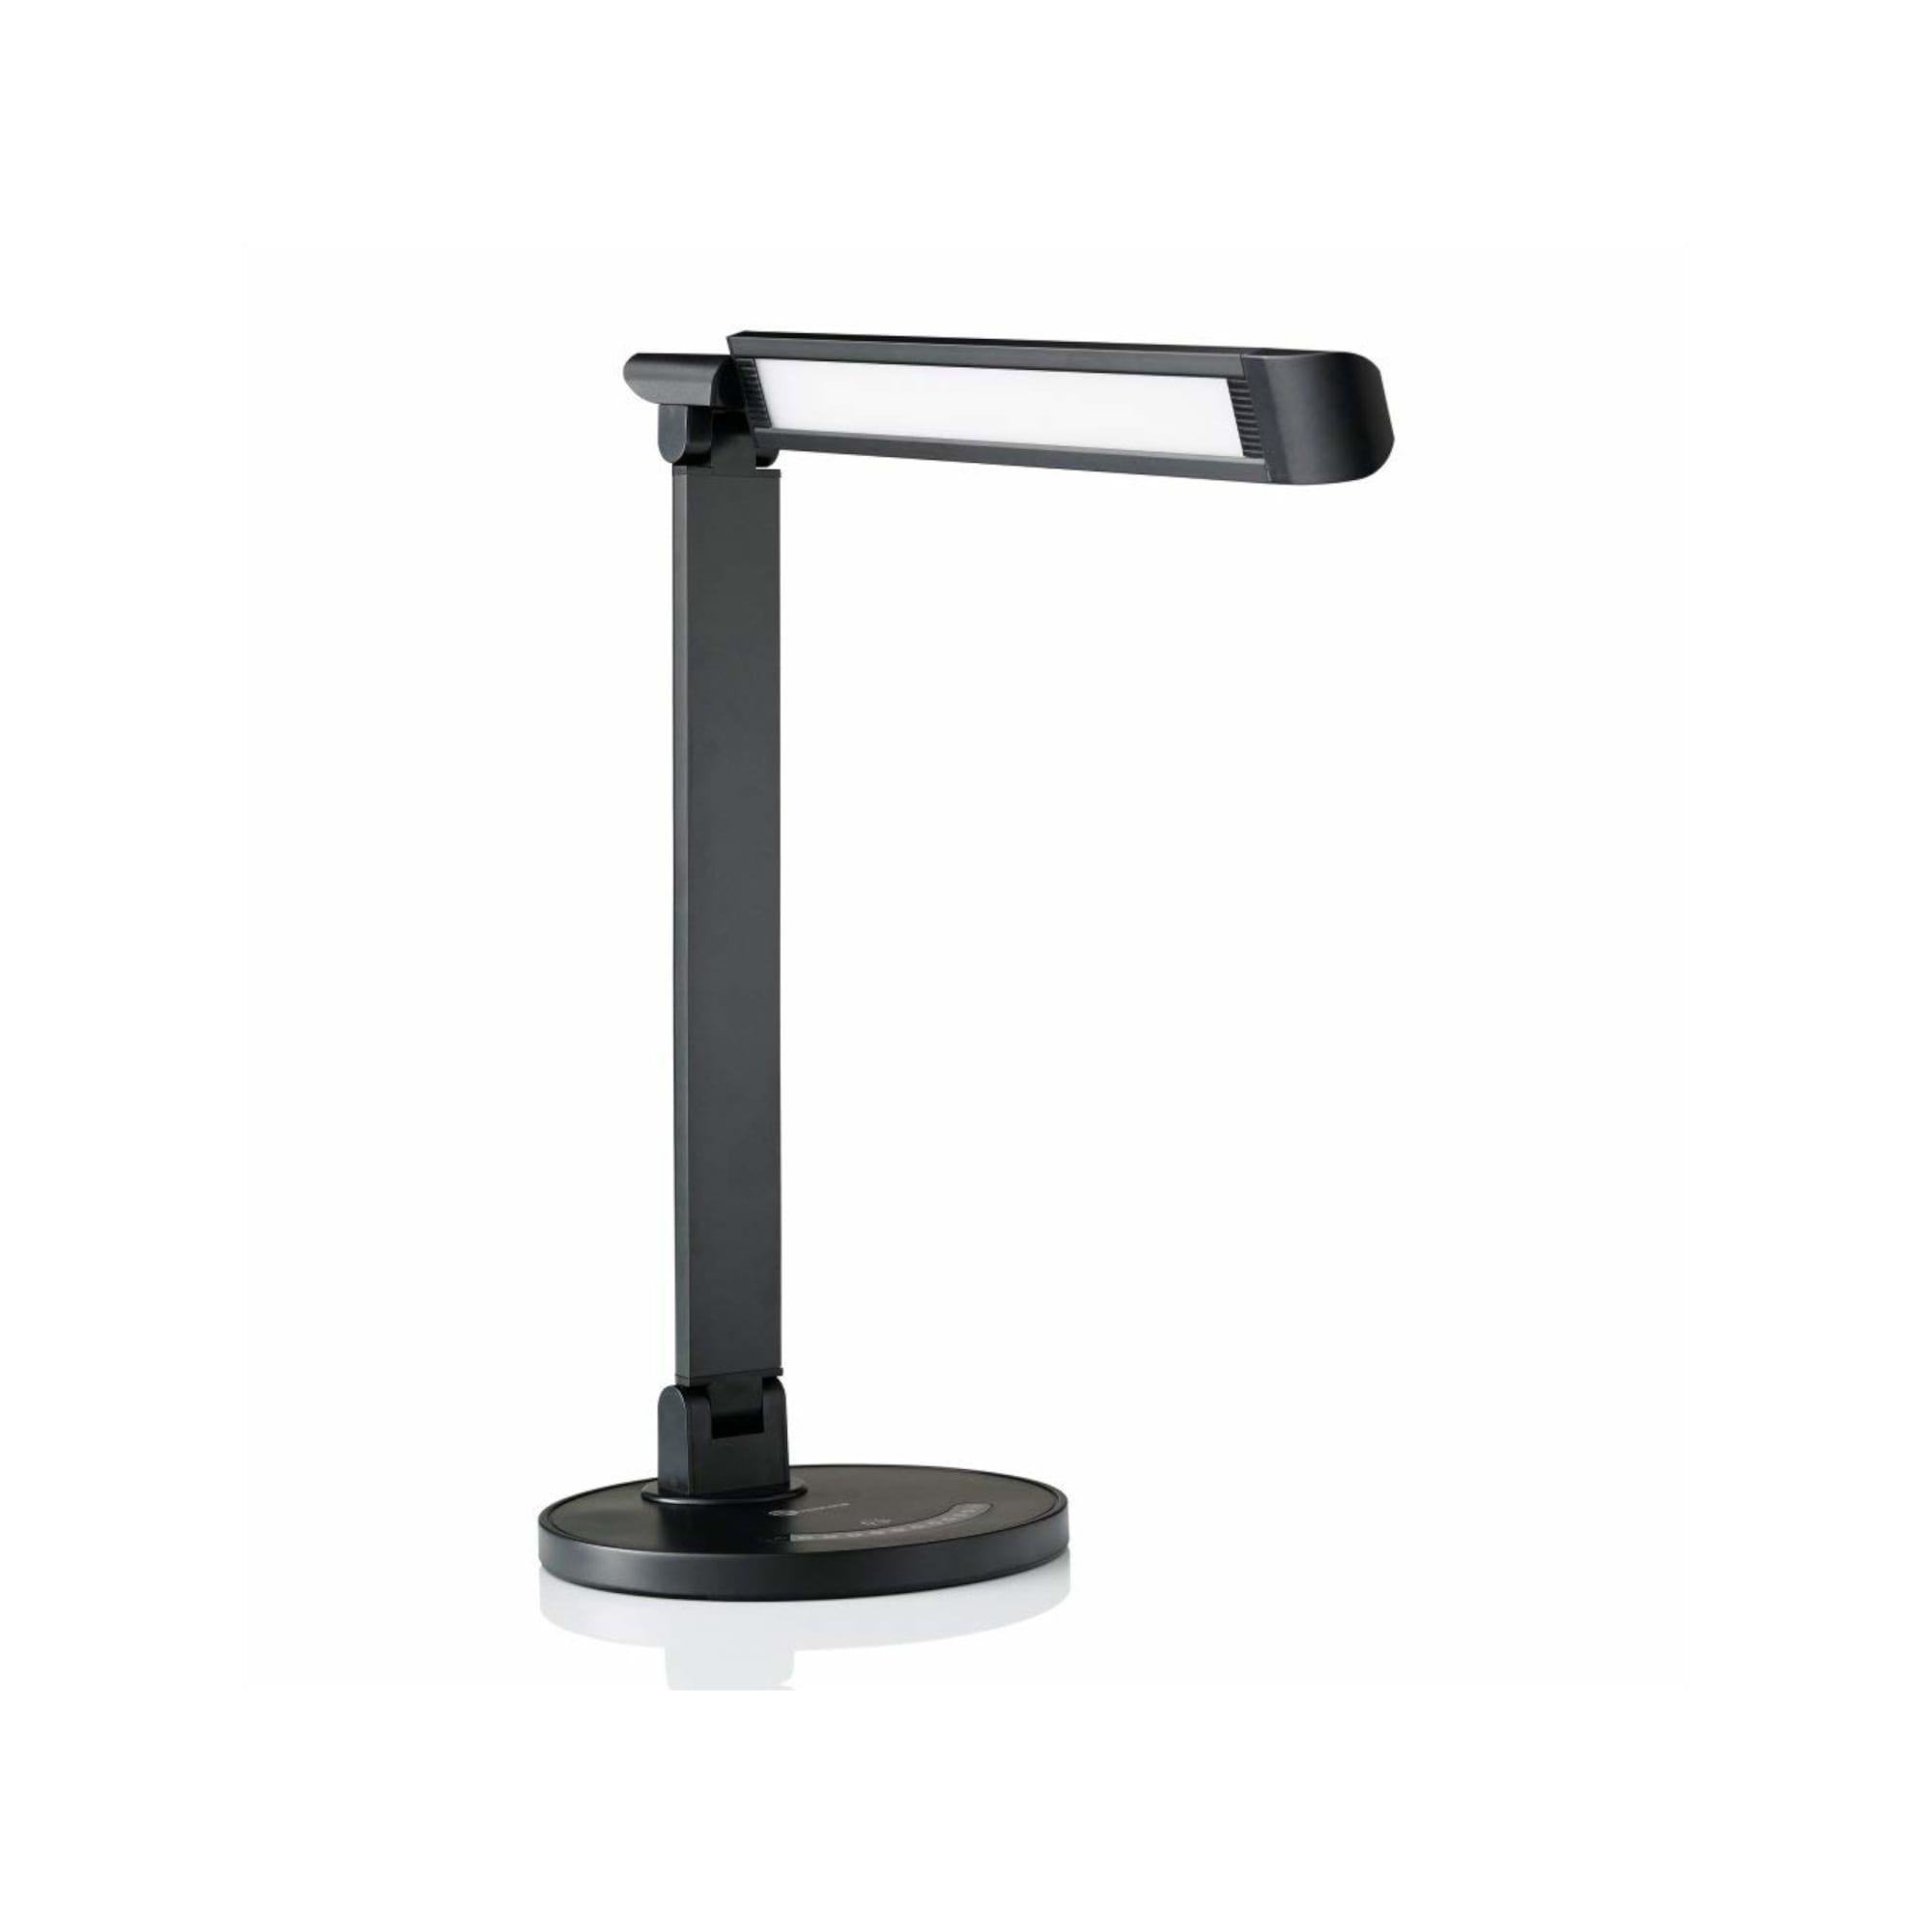 Taotronics LED 410 Lumen Desk Lamp with USB 5 V/1 A Charging Port - Black